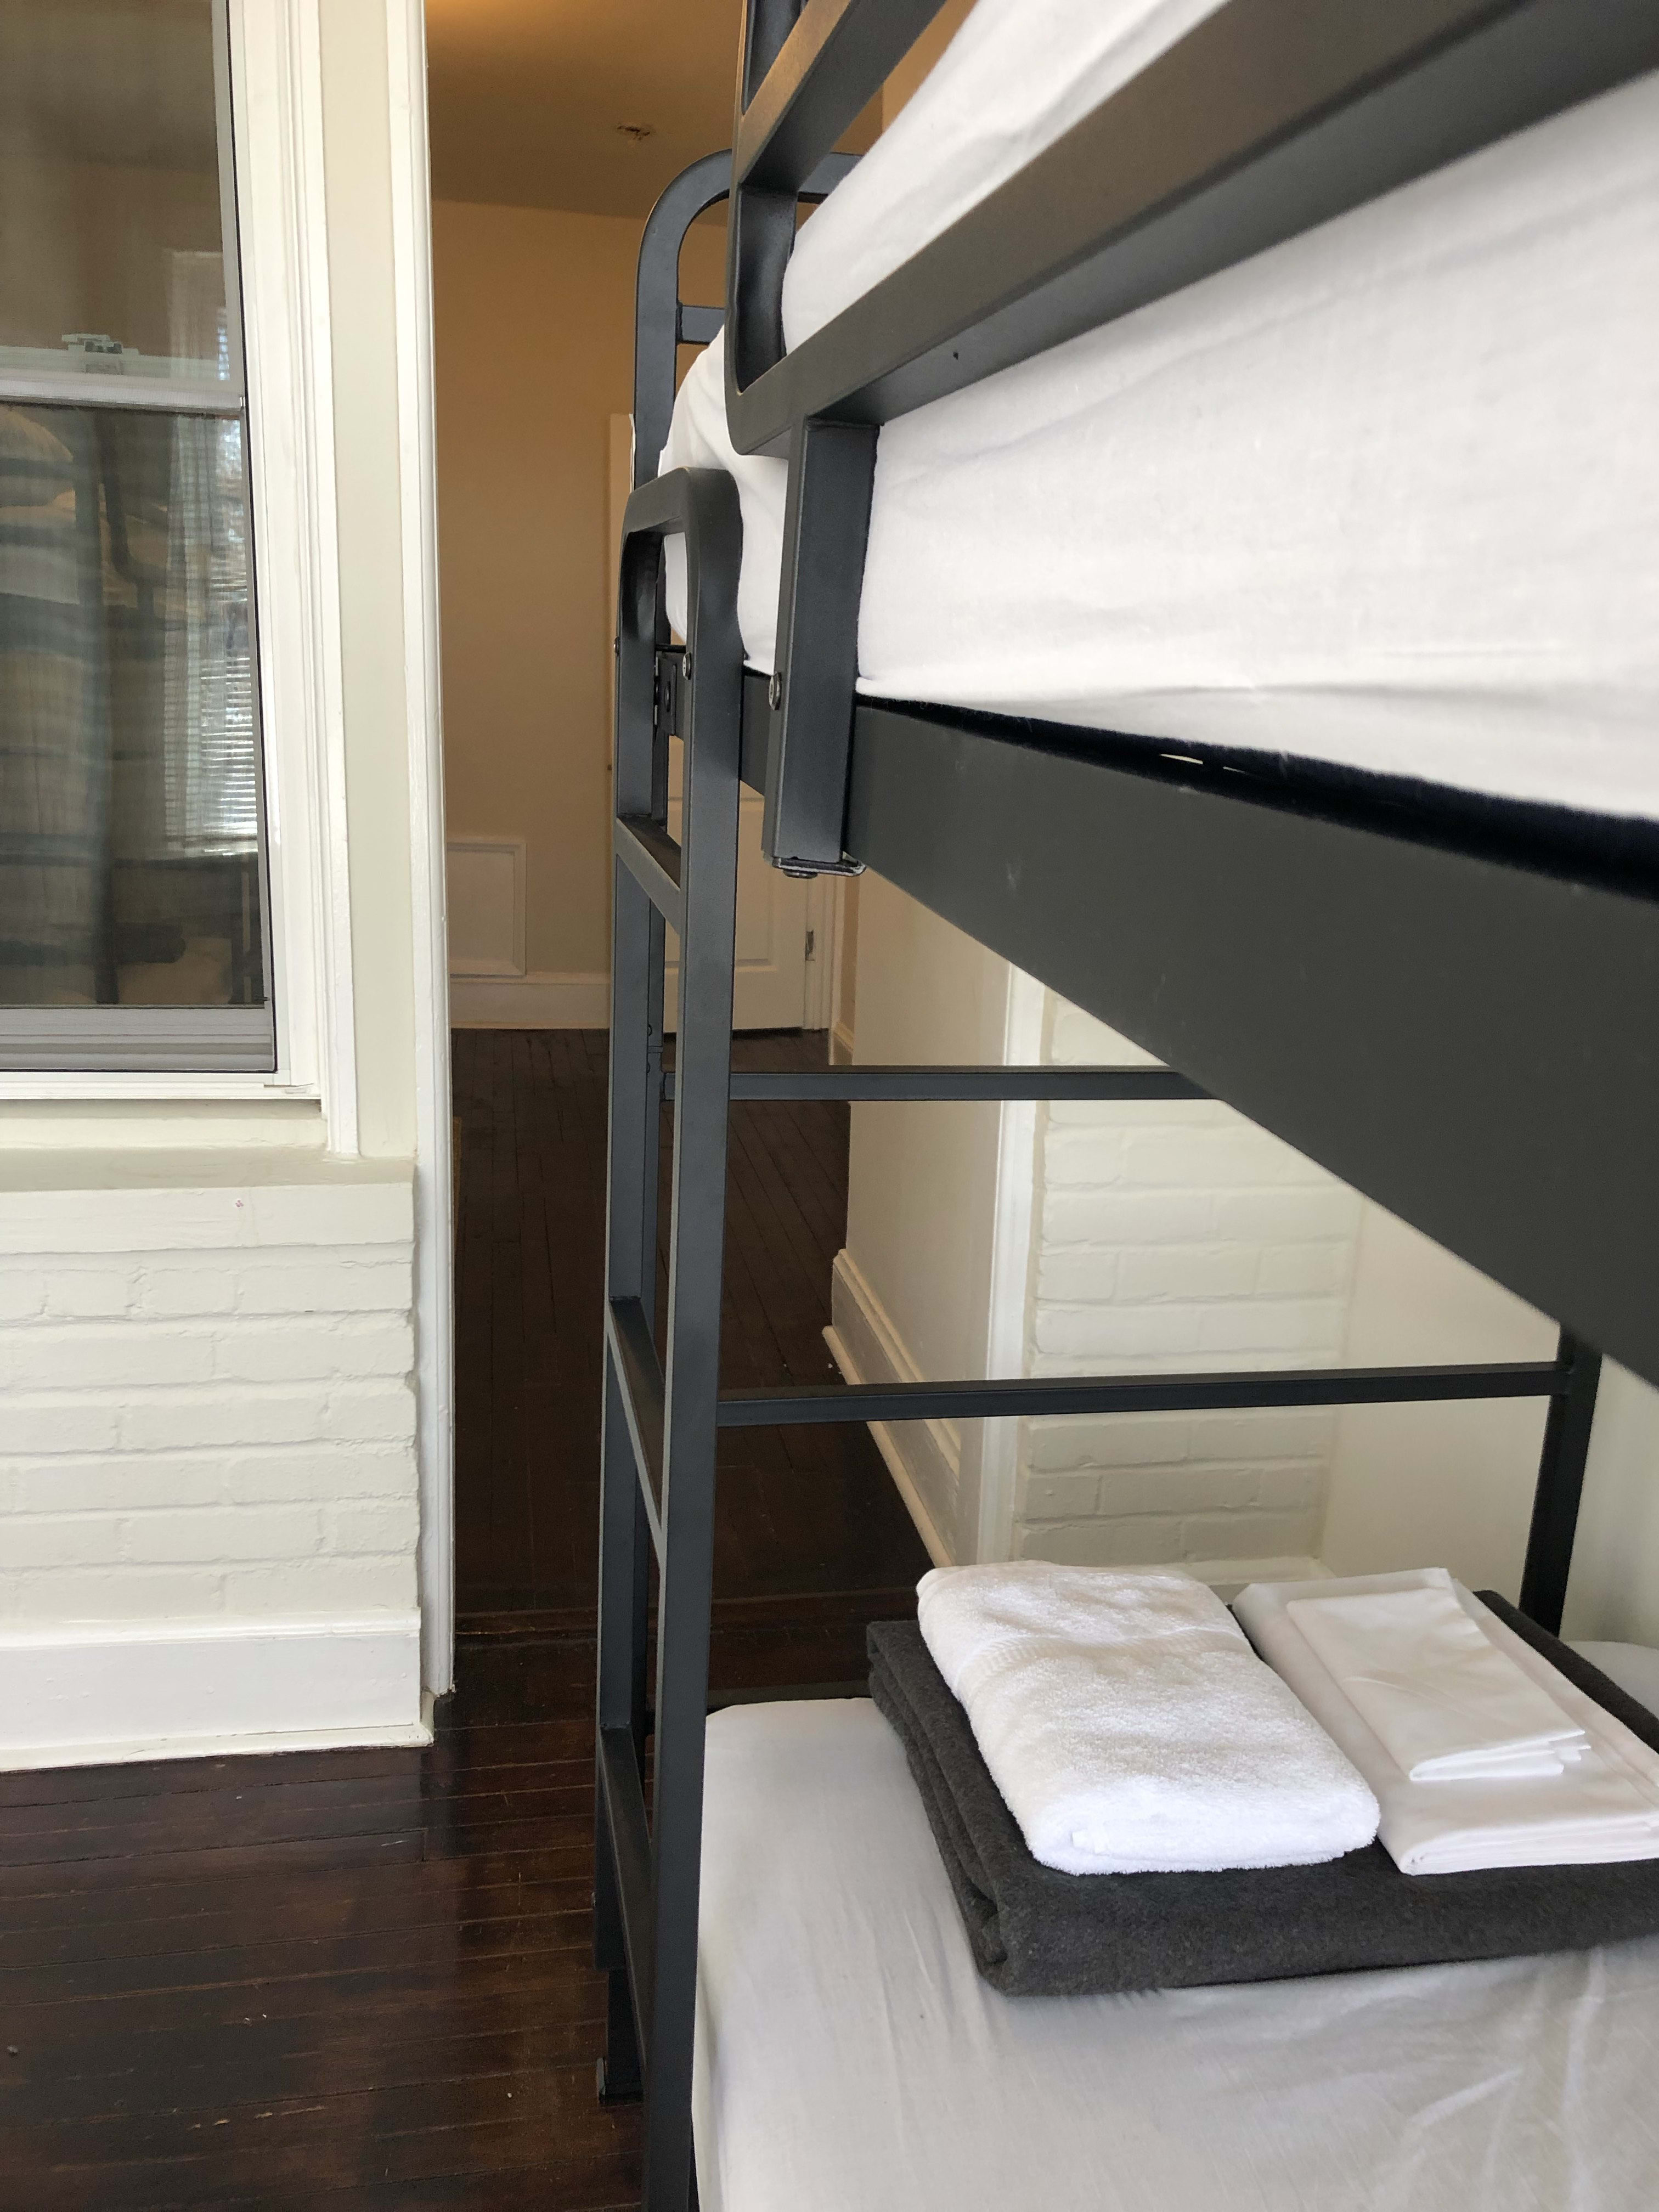 Hostel Comfort Zone, Washington DC, Prezzi e Recensioni 2021 - Hostelworld